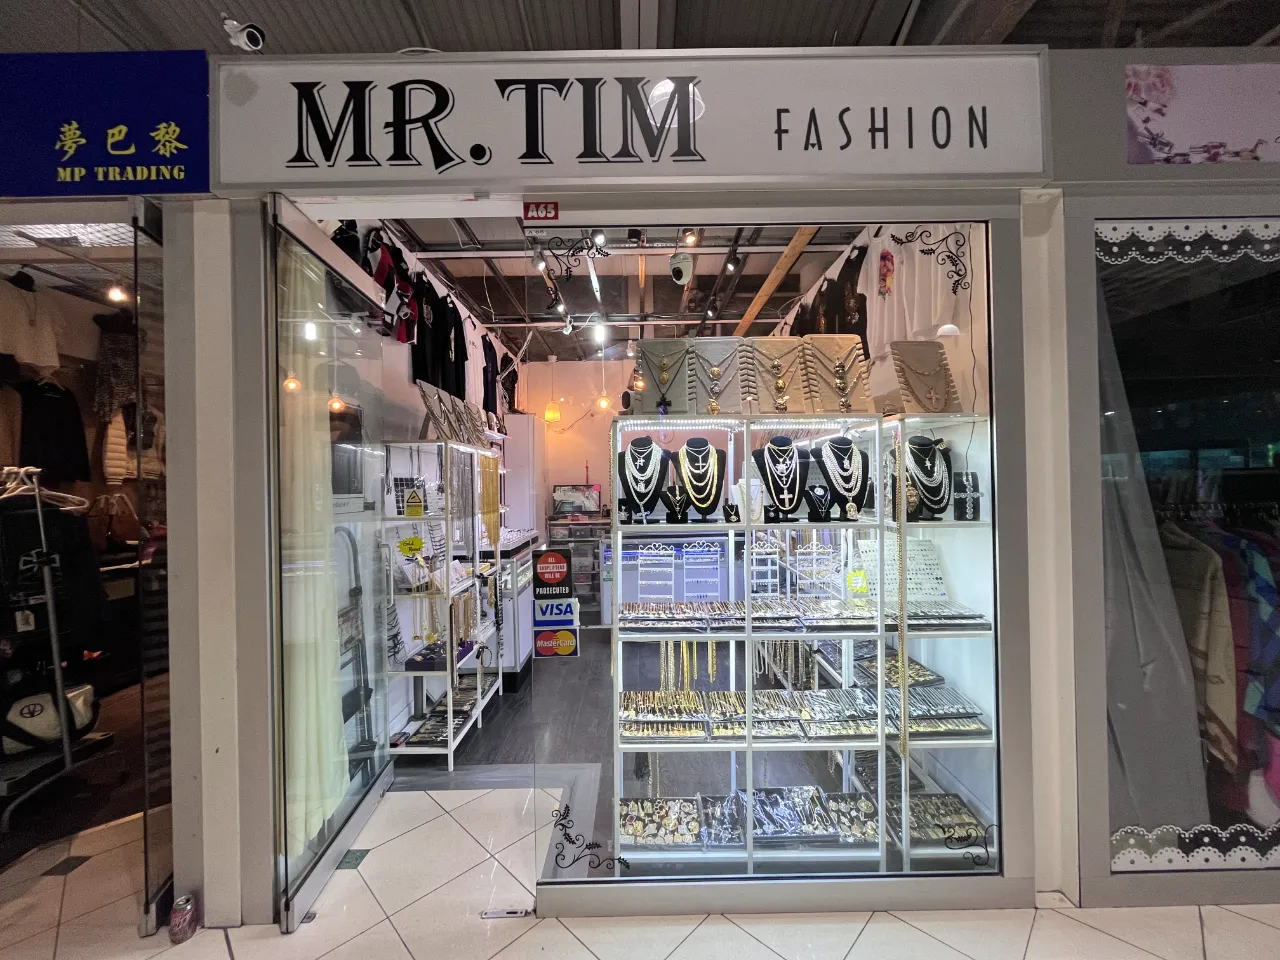 Mr. Tim Fashion